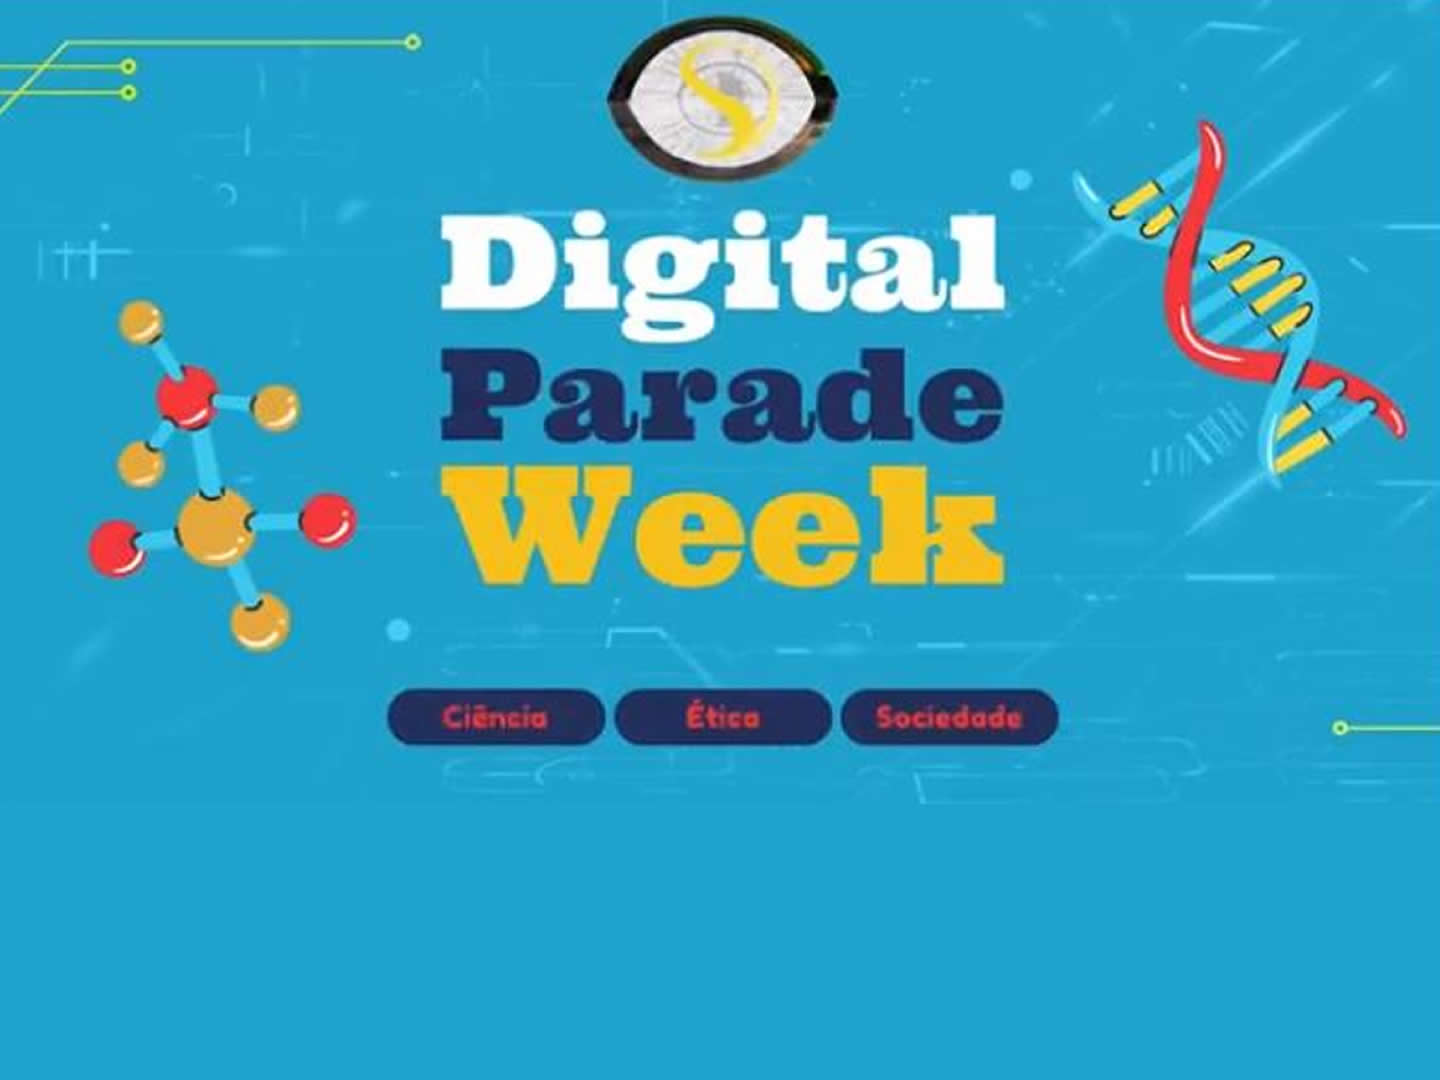 Digital Parade Week